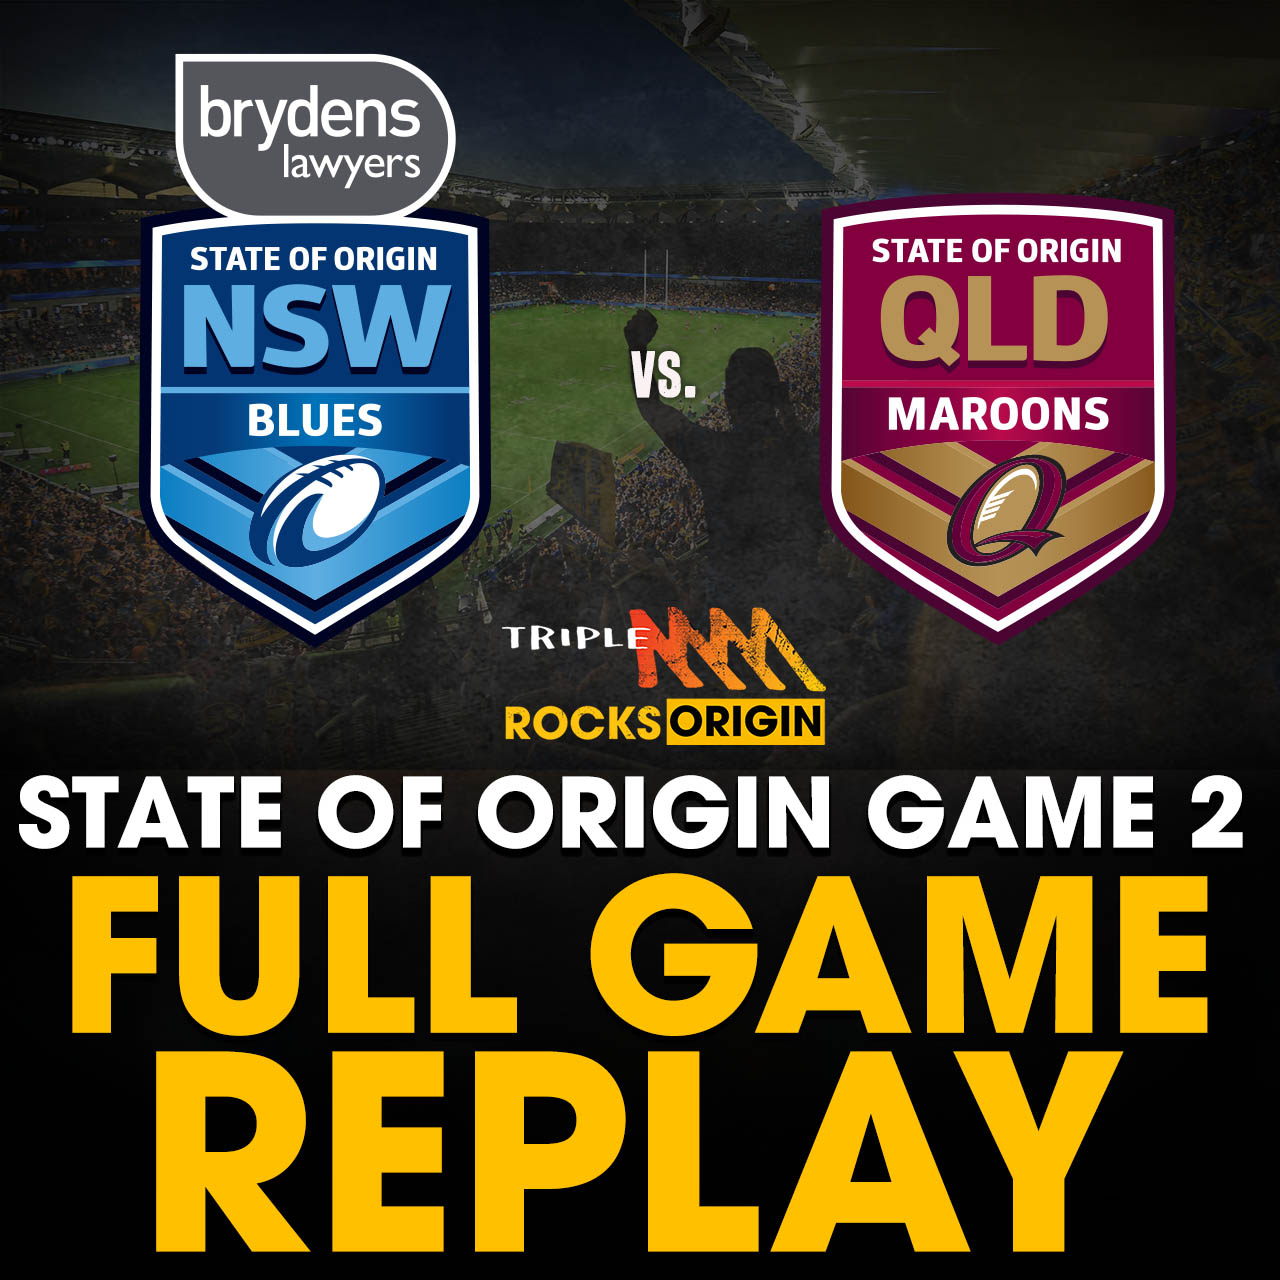 FULL GAME REPLAY | State Of Origin Game 2: NSW vs. QLD